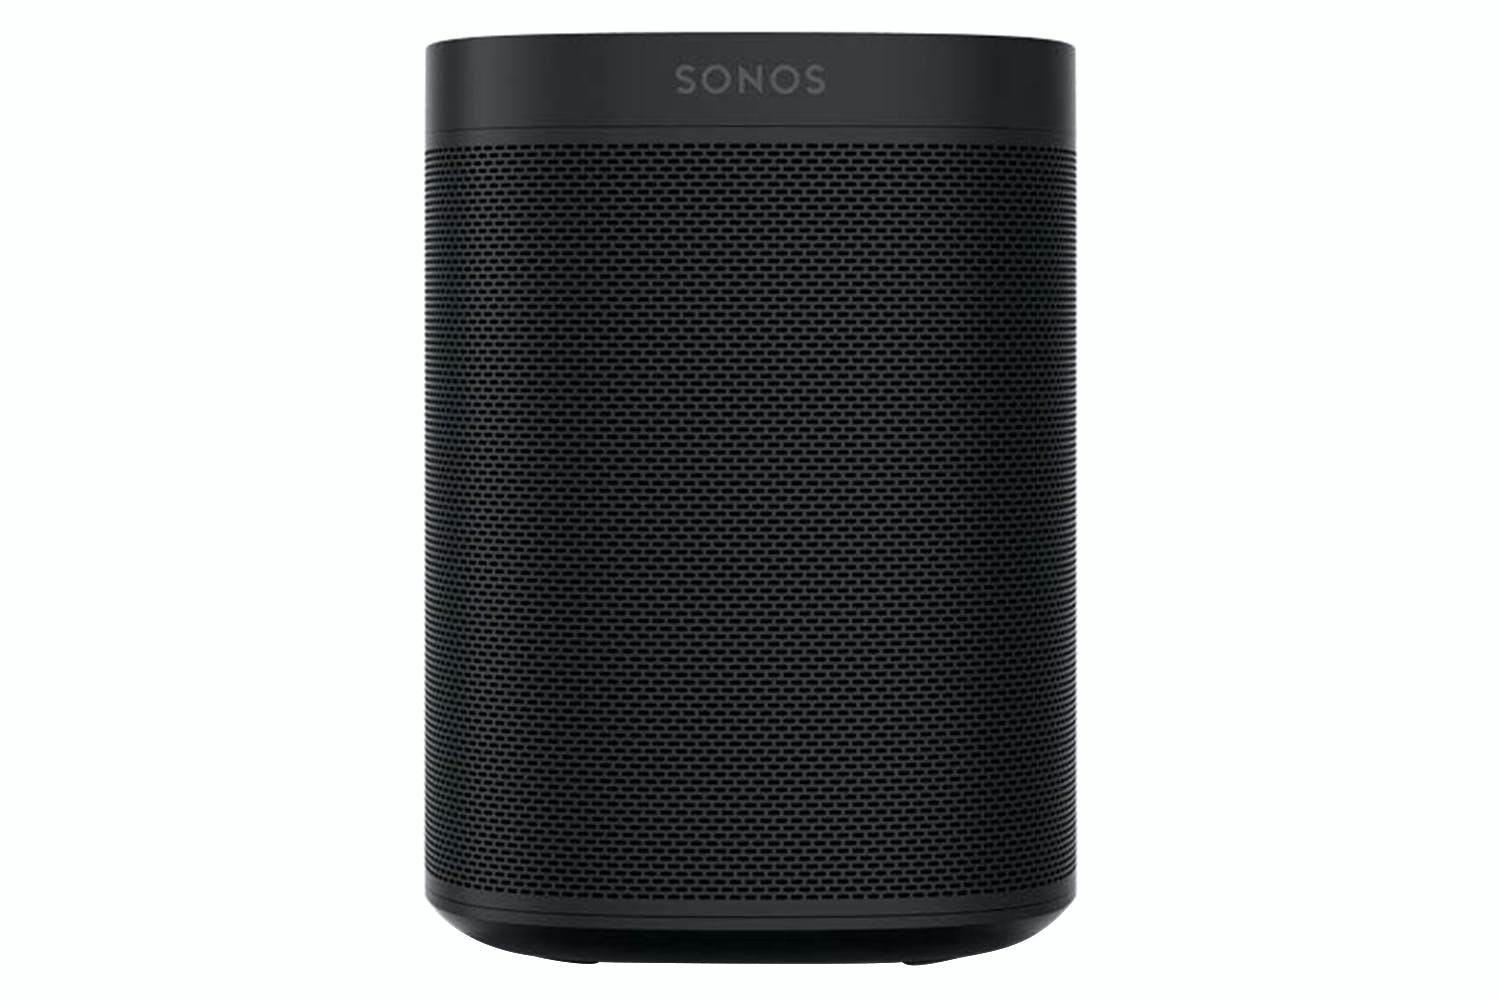 Sonos One SL - Microphone-Free Smart Speaker Black 